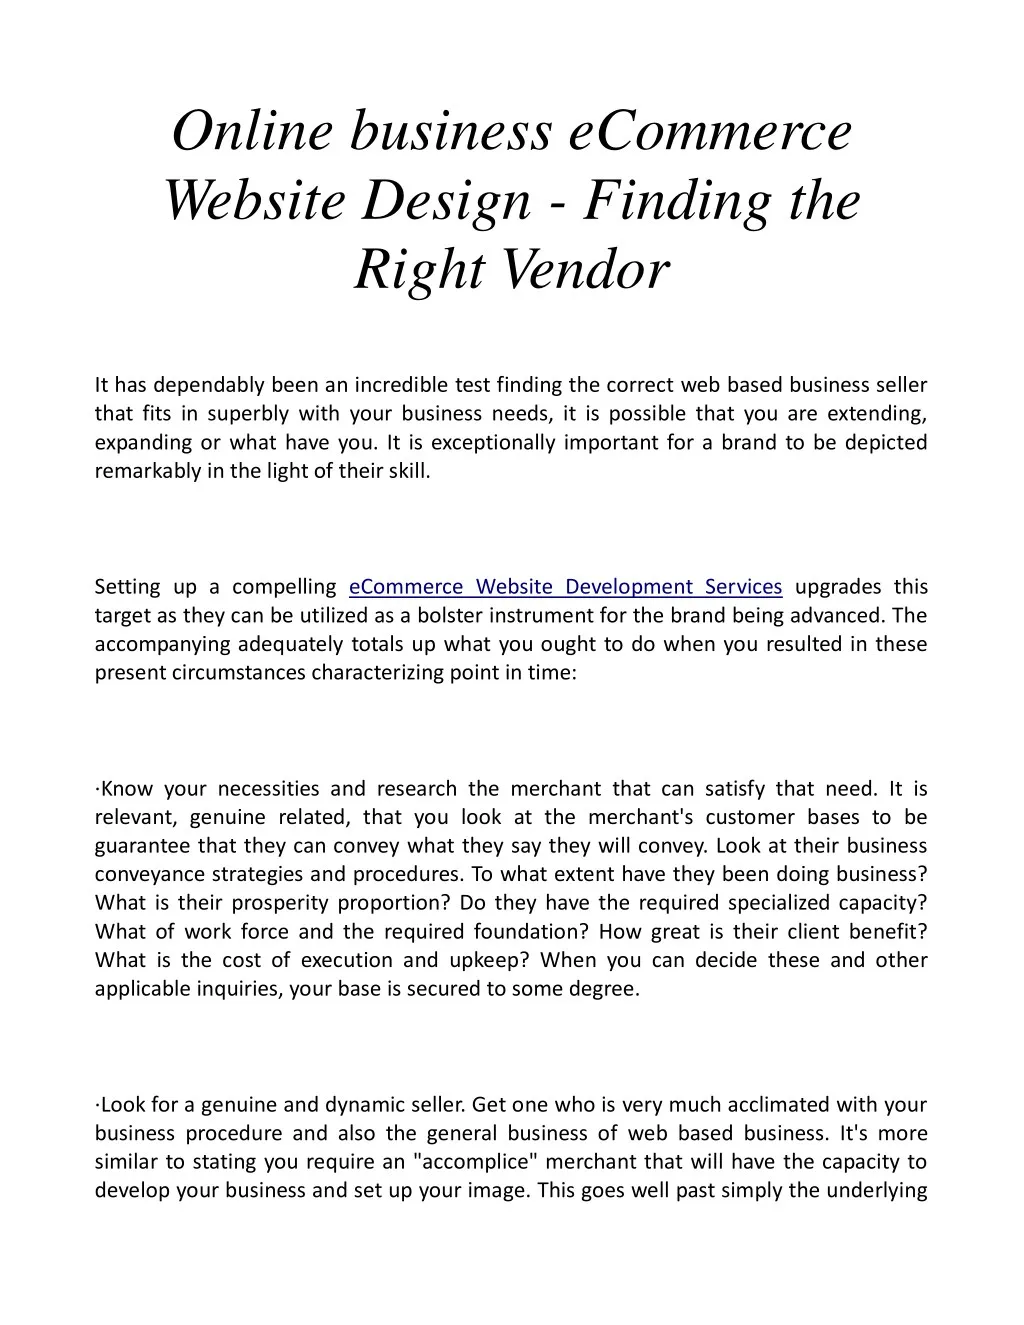 online business ecommerce website design finding